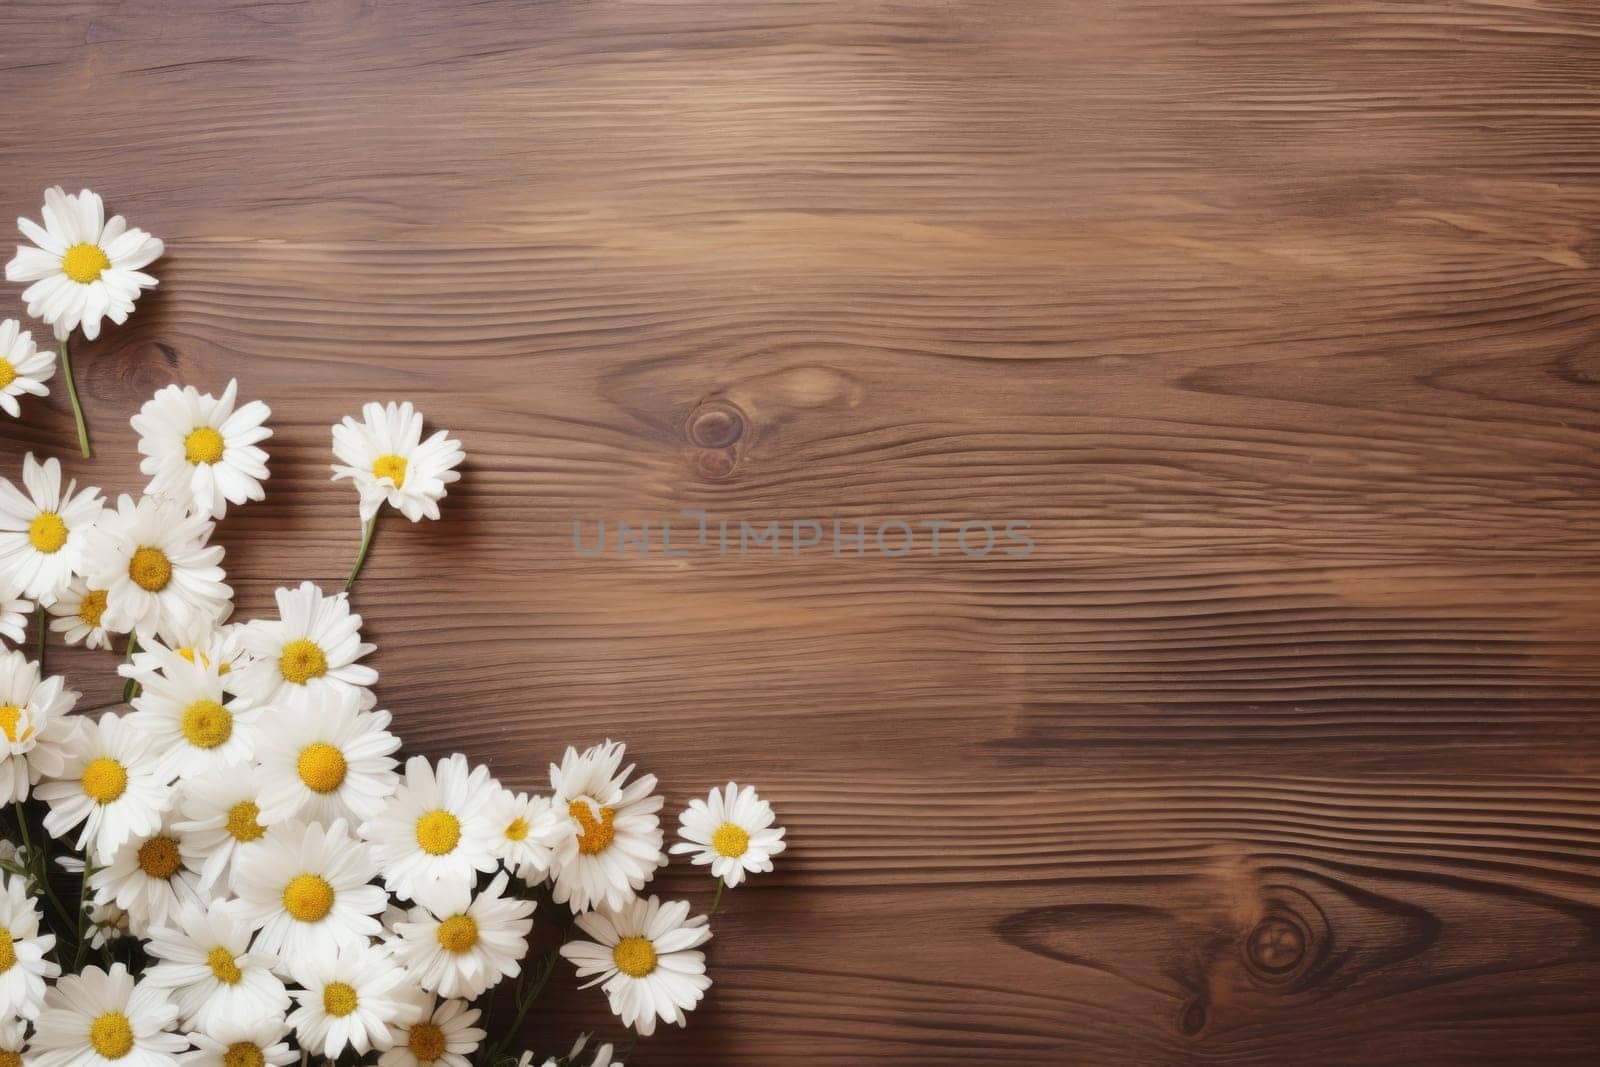 White daisy flowers gypsophila on wood table with copy space, minimal lifestyle concept by nijieimu